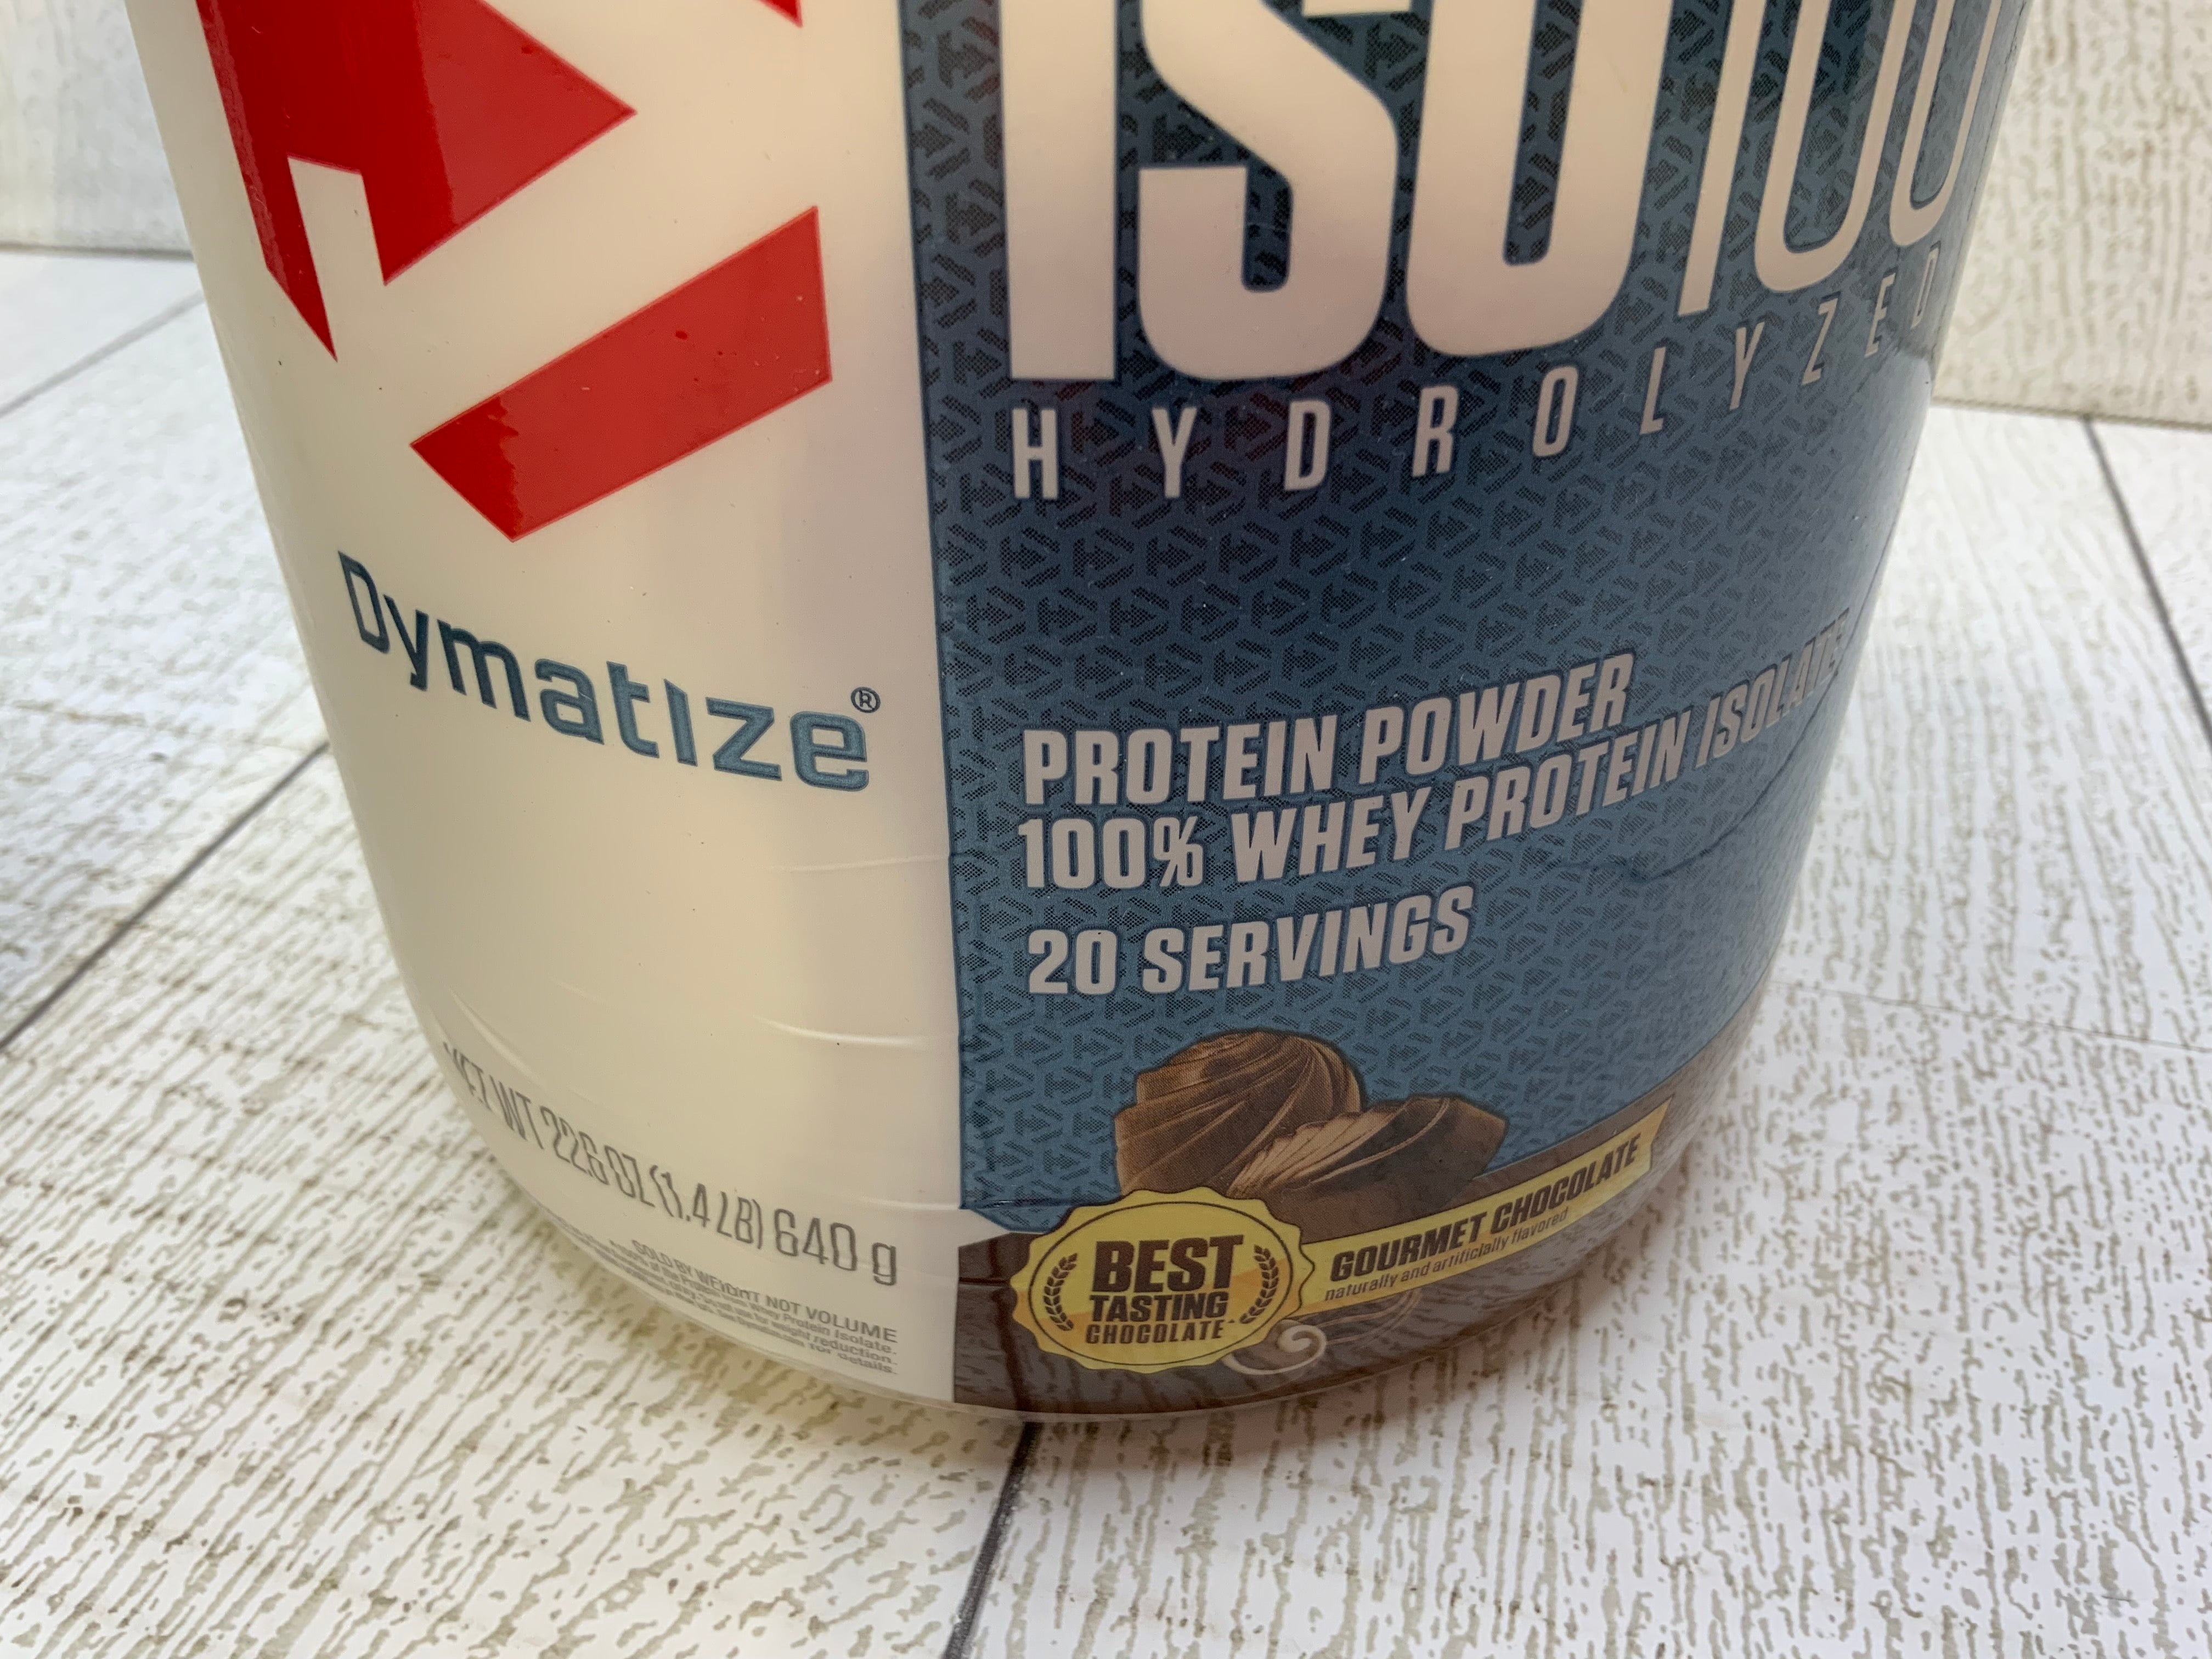 Dymatize Nutrition Iso 100 Hydrolyzed 100% Whey Protein (Gourmet Chocolate) (7942708756718)